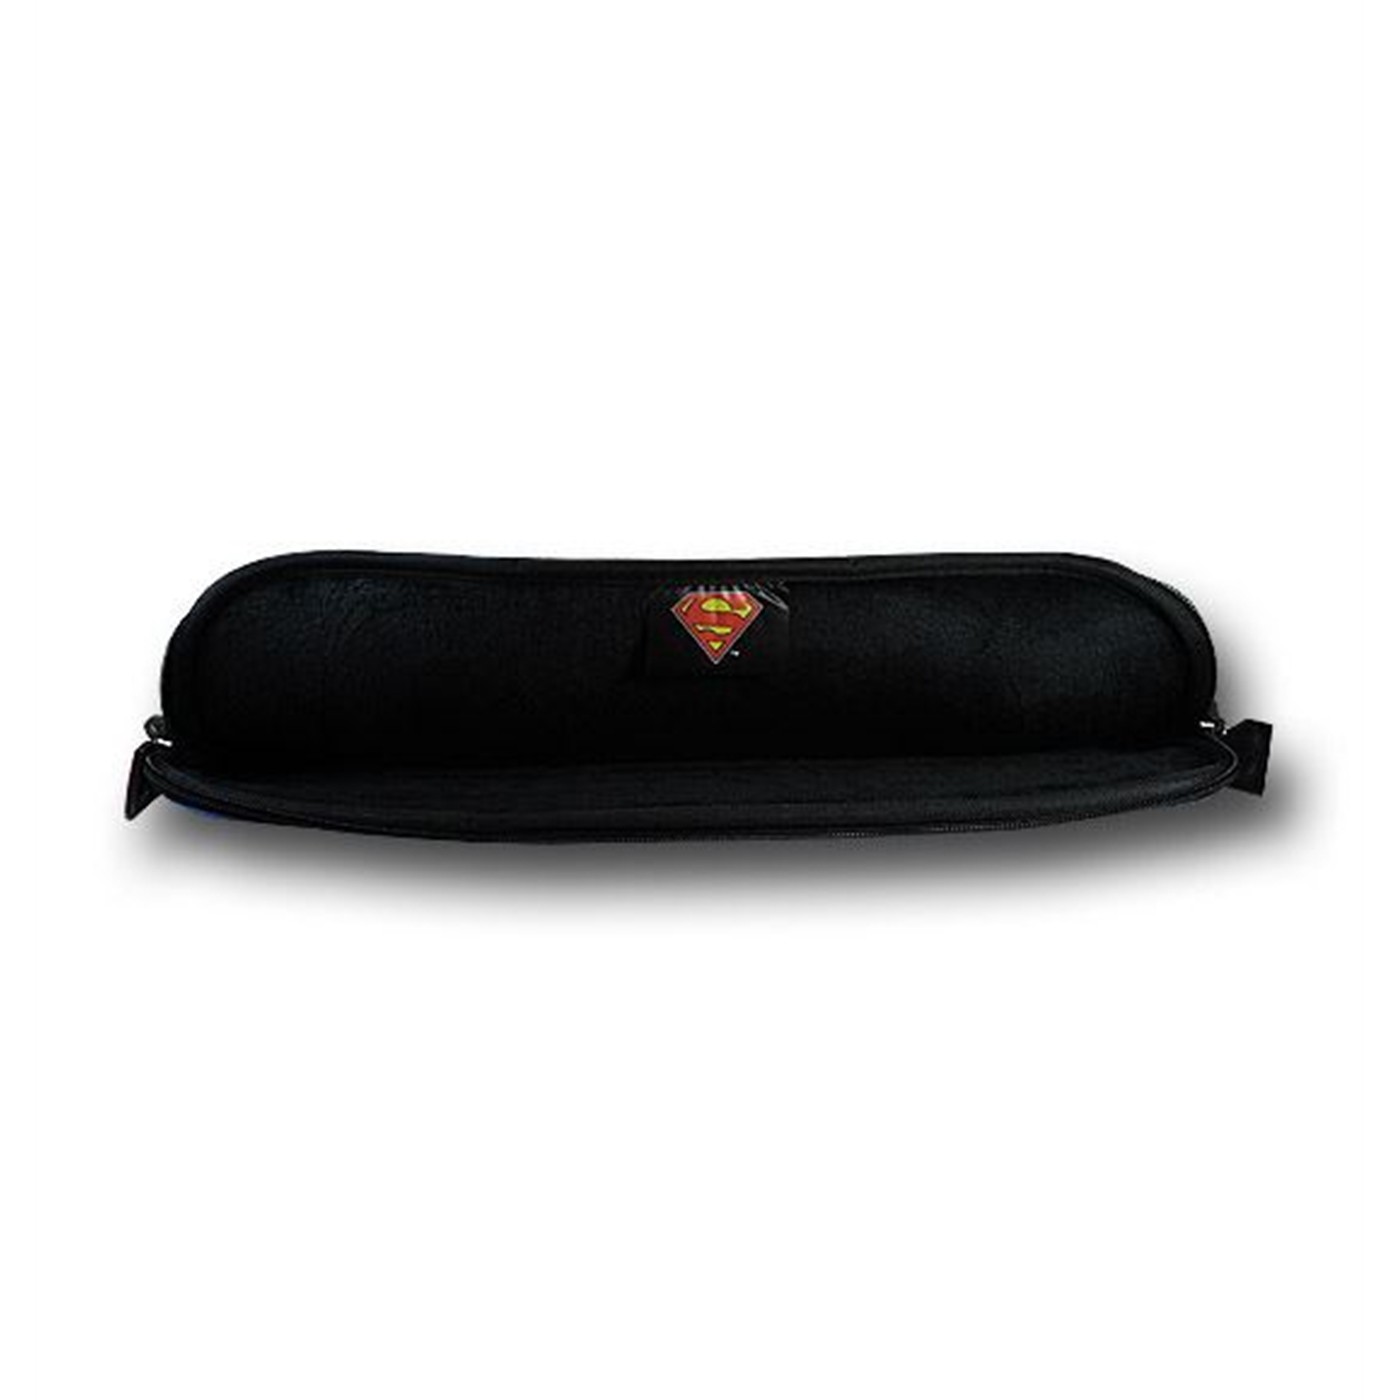 Superman Symbol Soft Laptop Bag